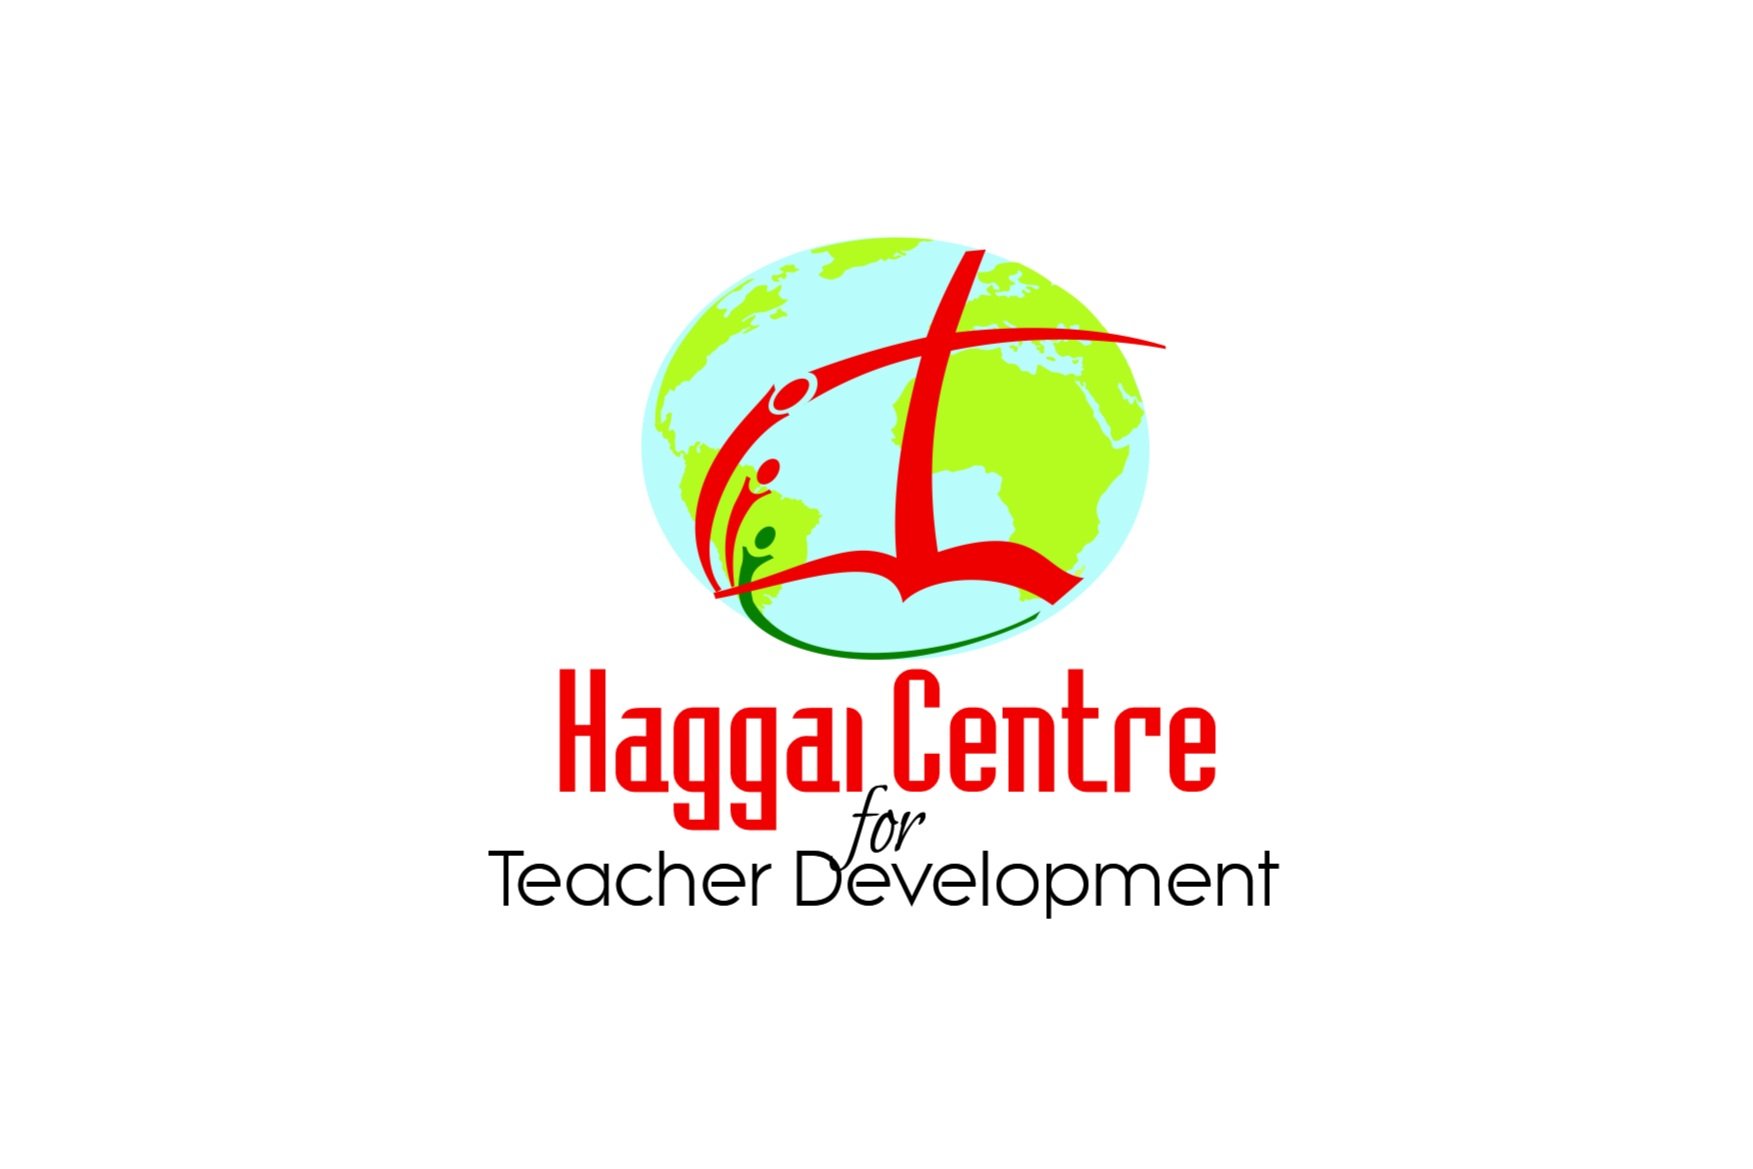 HAGGAI CENTRE FOR TEACHER DEVELOPMENT